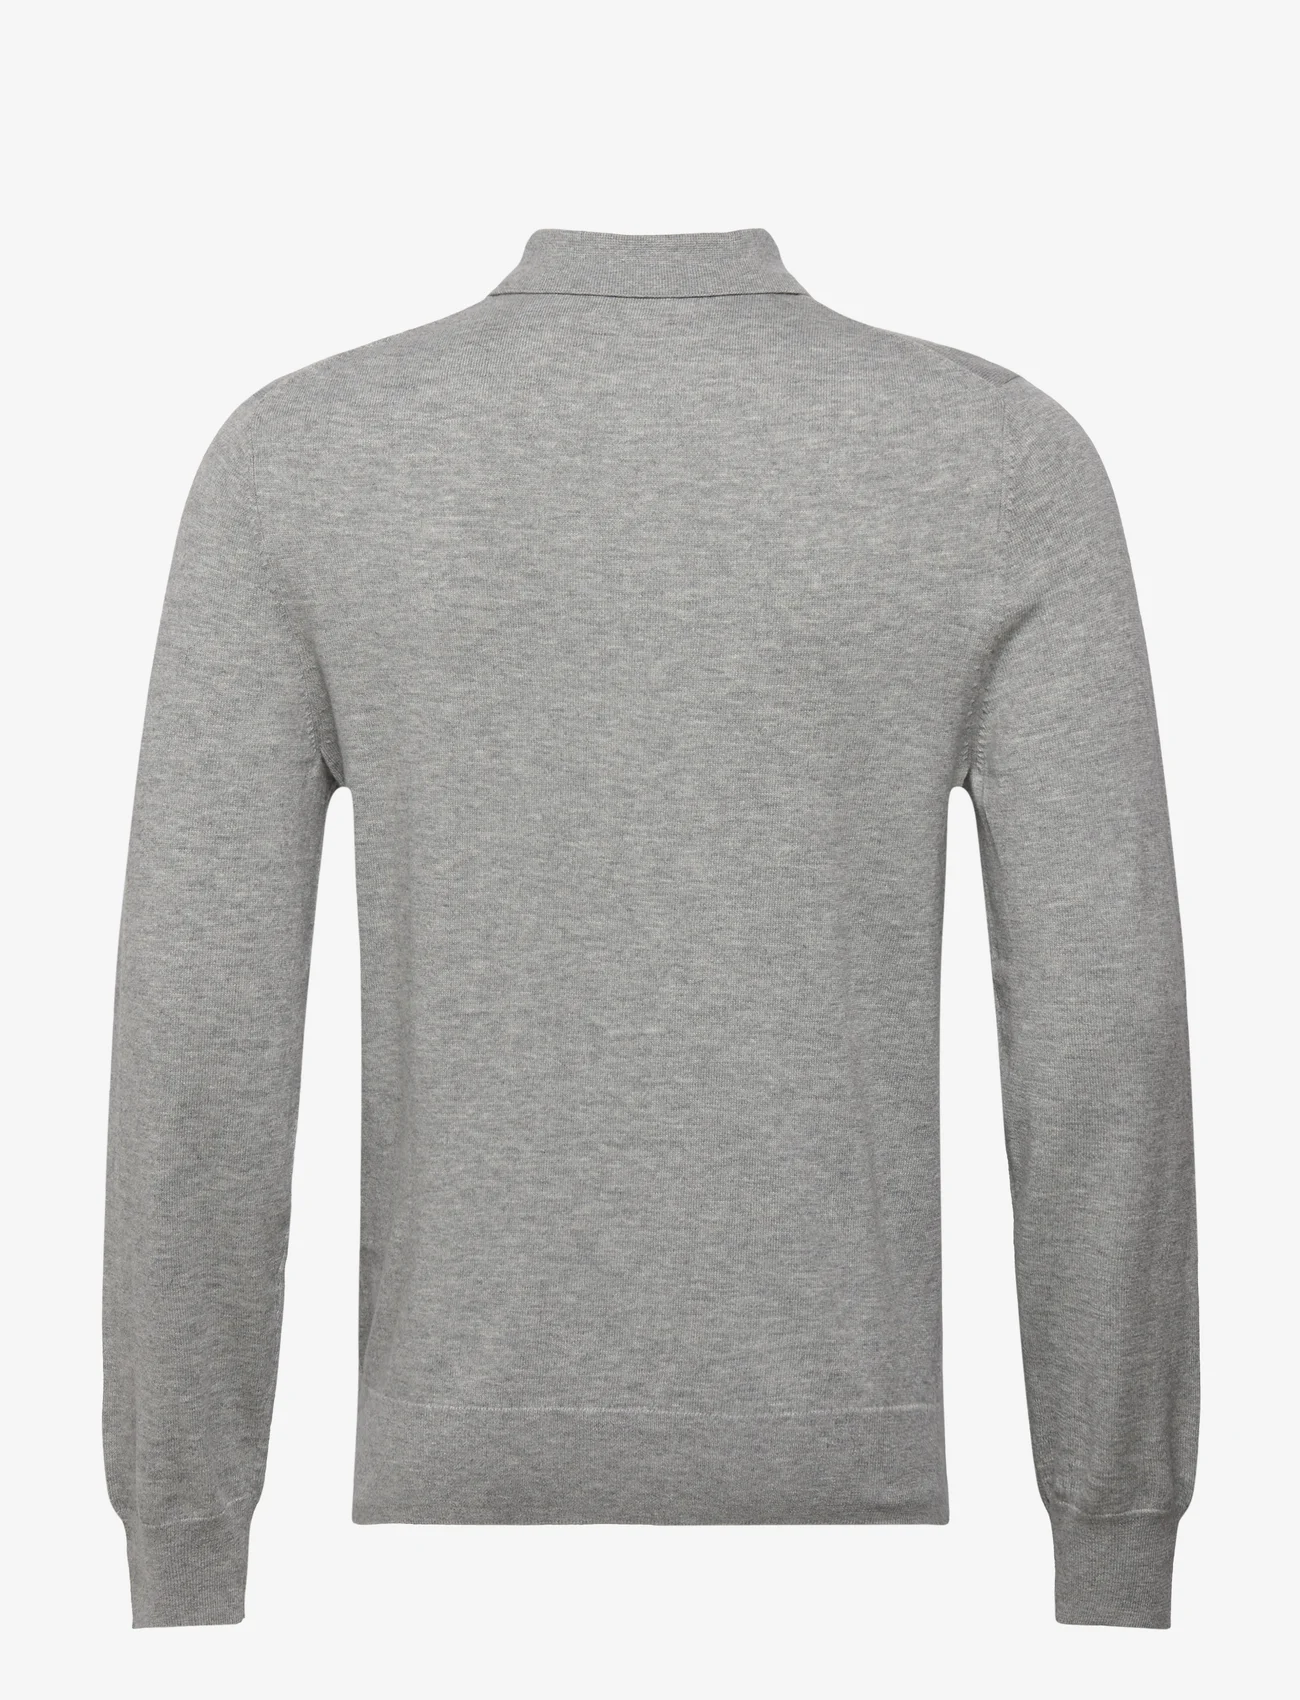 Filippa K - Knitted Polo Shirt - podstawowe koszulki - light grey - 1